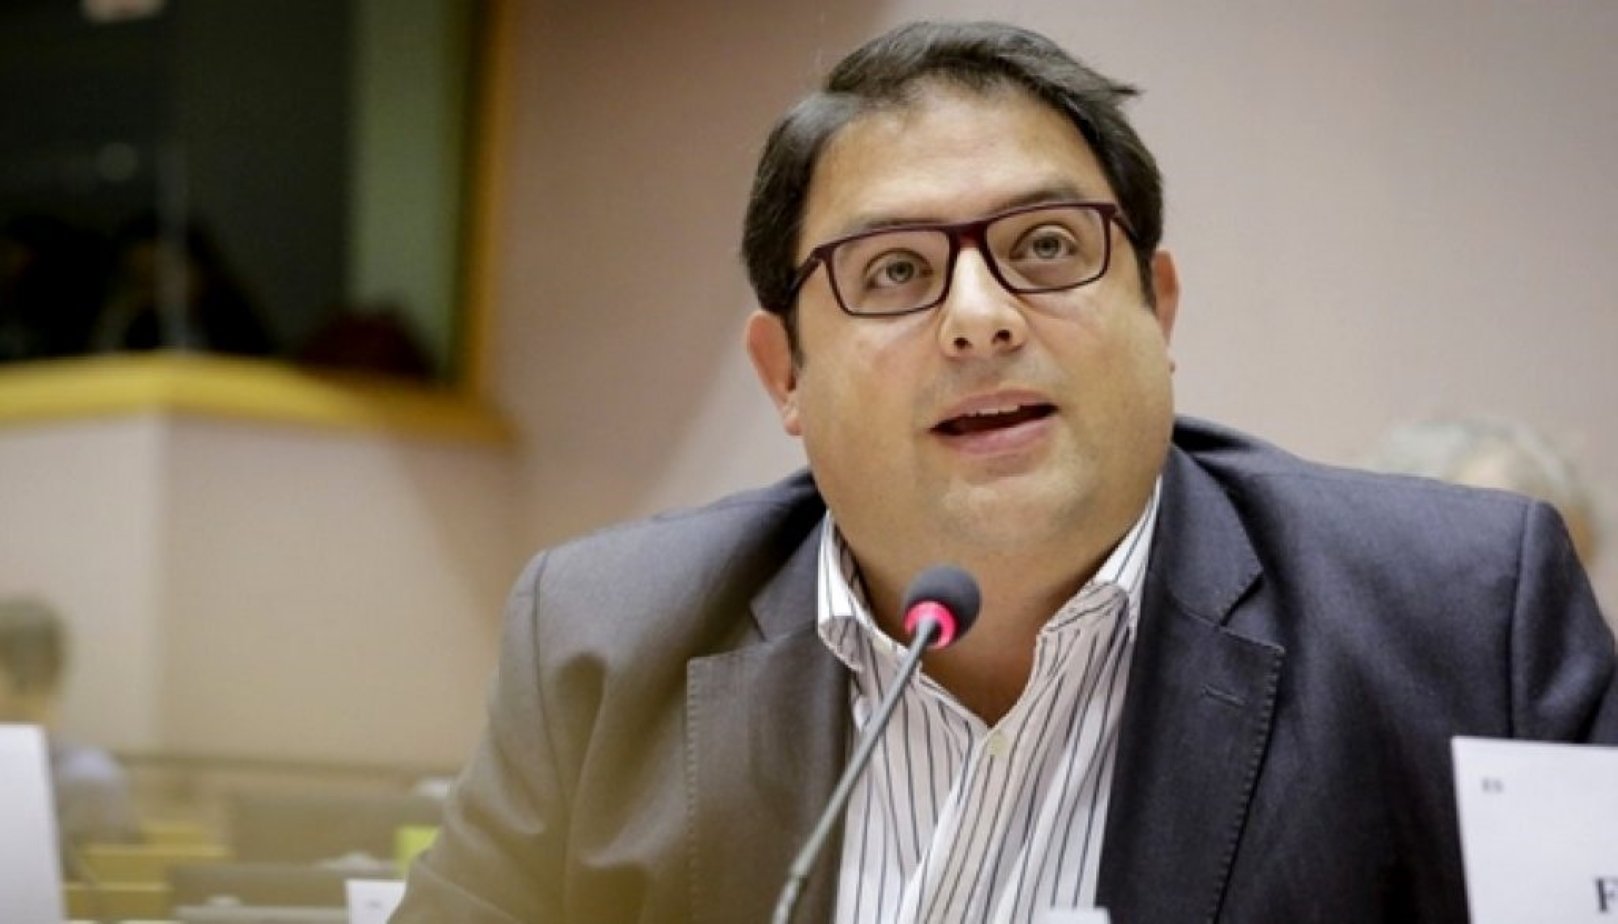 Mor l'exeurodiputat d'UDC Francesc Gambús, als 45 anys